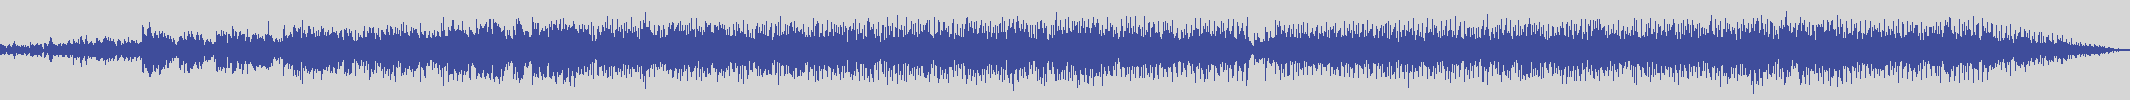 digiphonic_records [DPR013] Little Tony - Un Cavallo Senza Nome [Original Mix] audio wave form